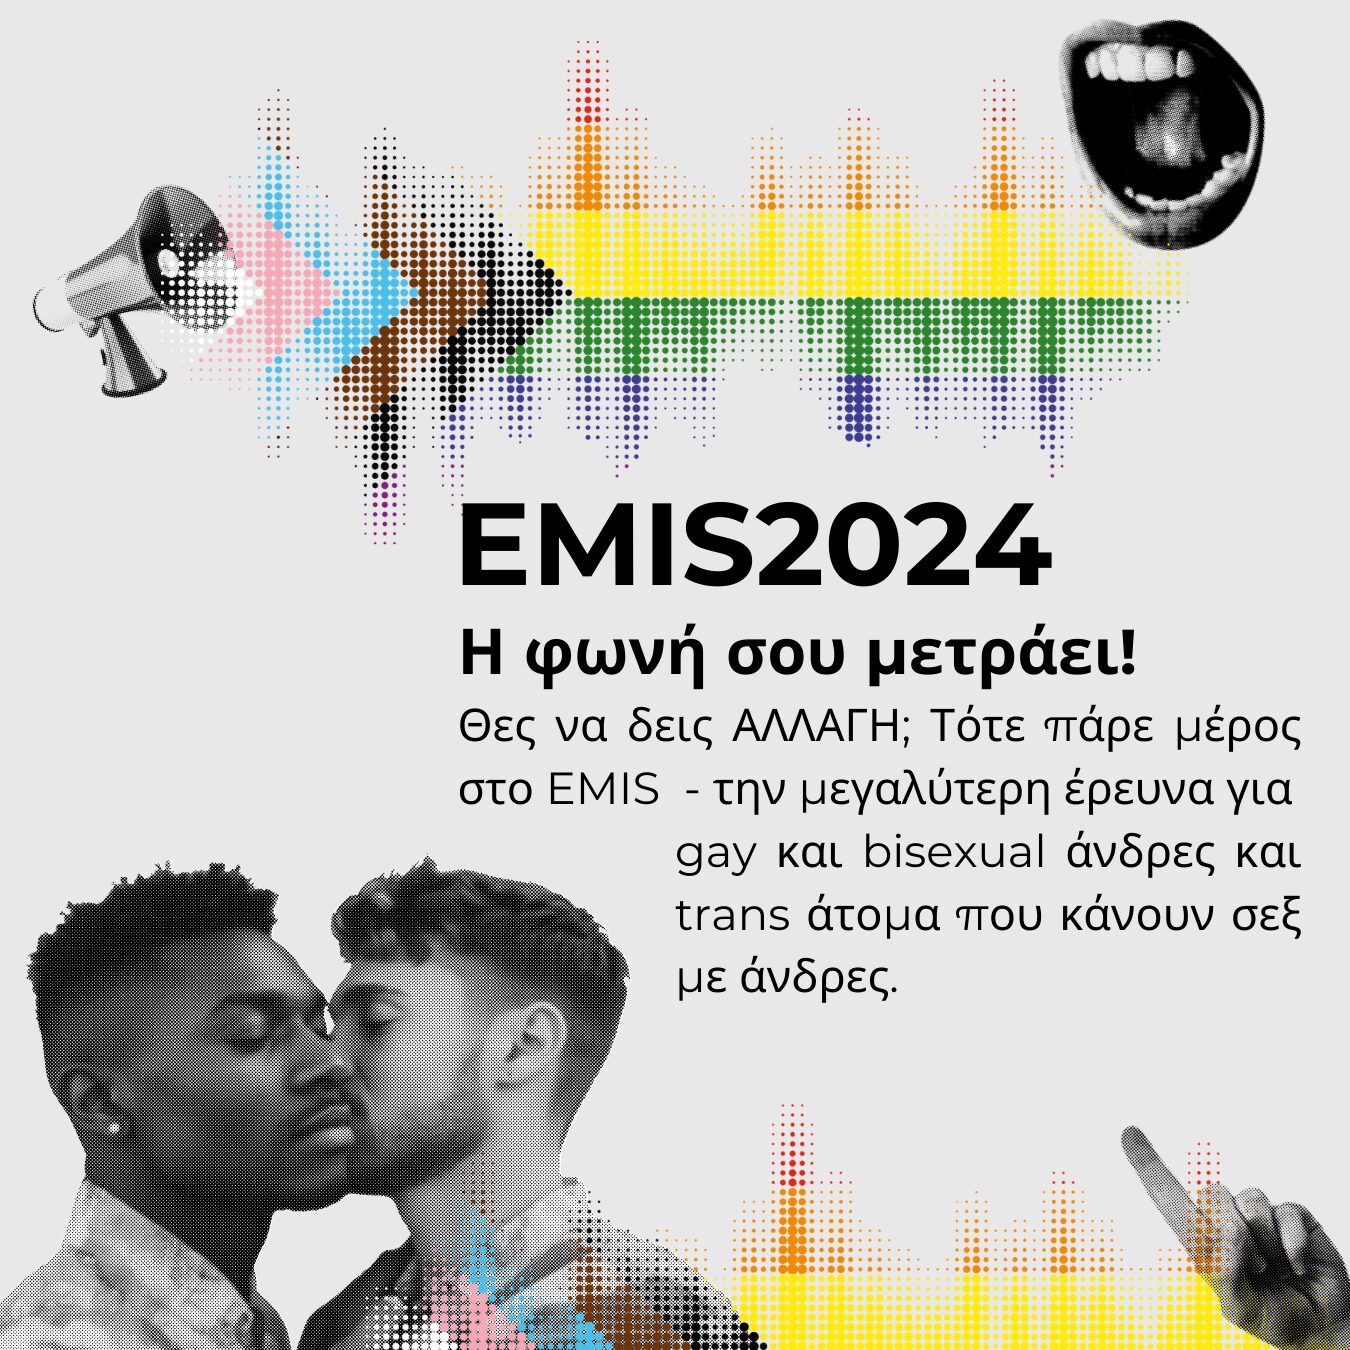 Featured image for “Πάρε μέρος στην πανευρωπαϊκή έρευνα EMIS 2024”